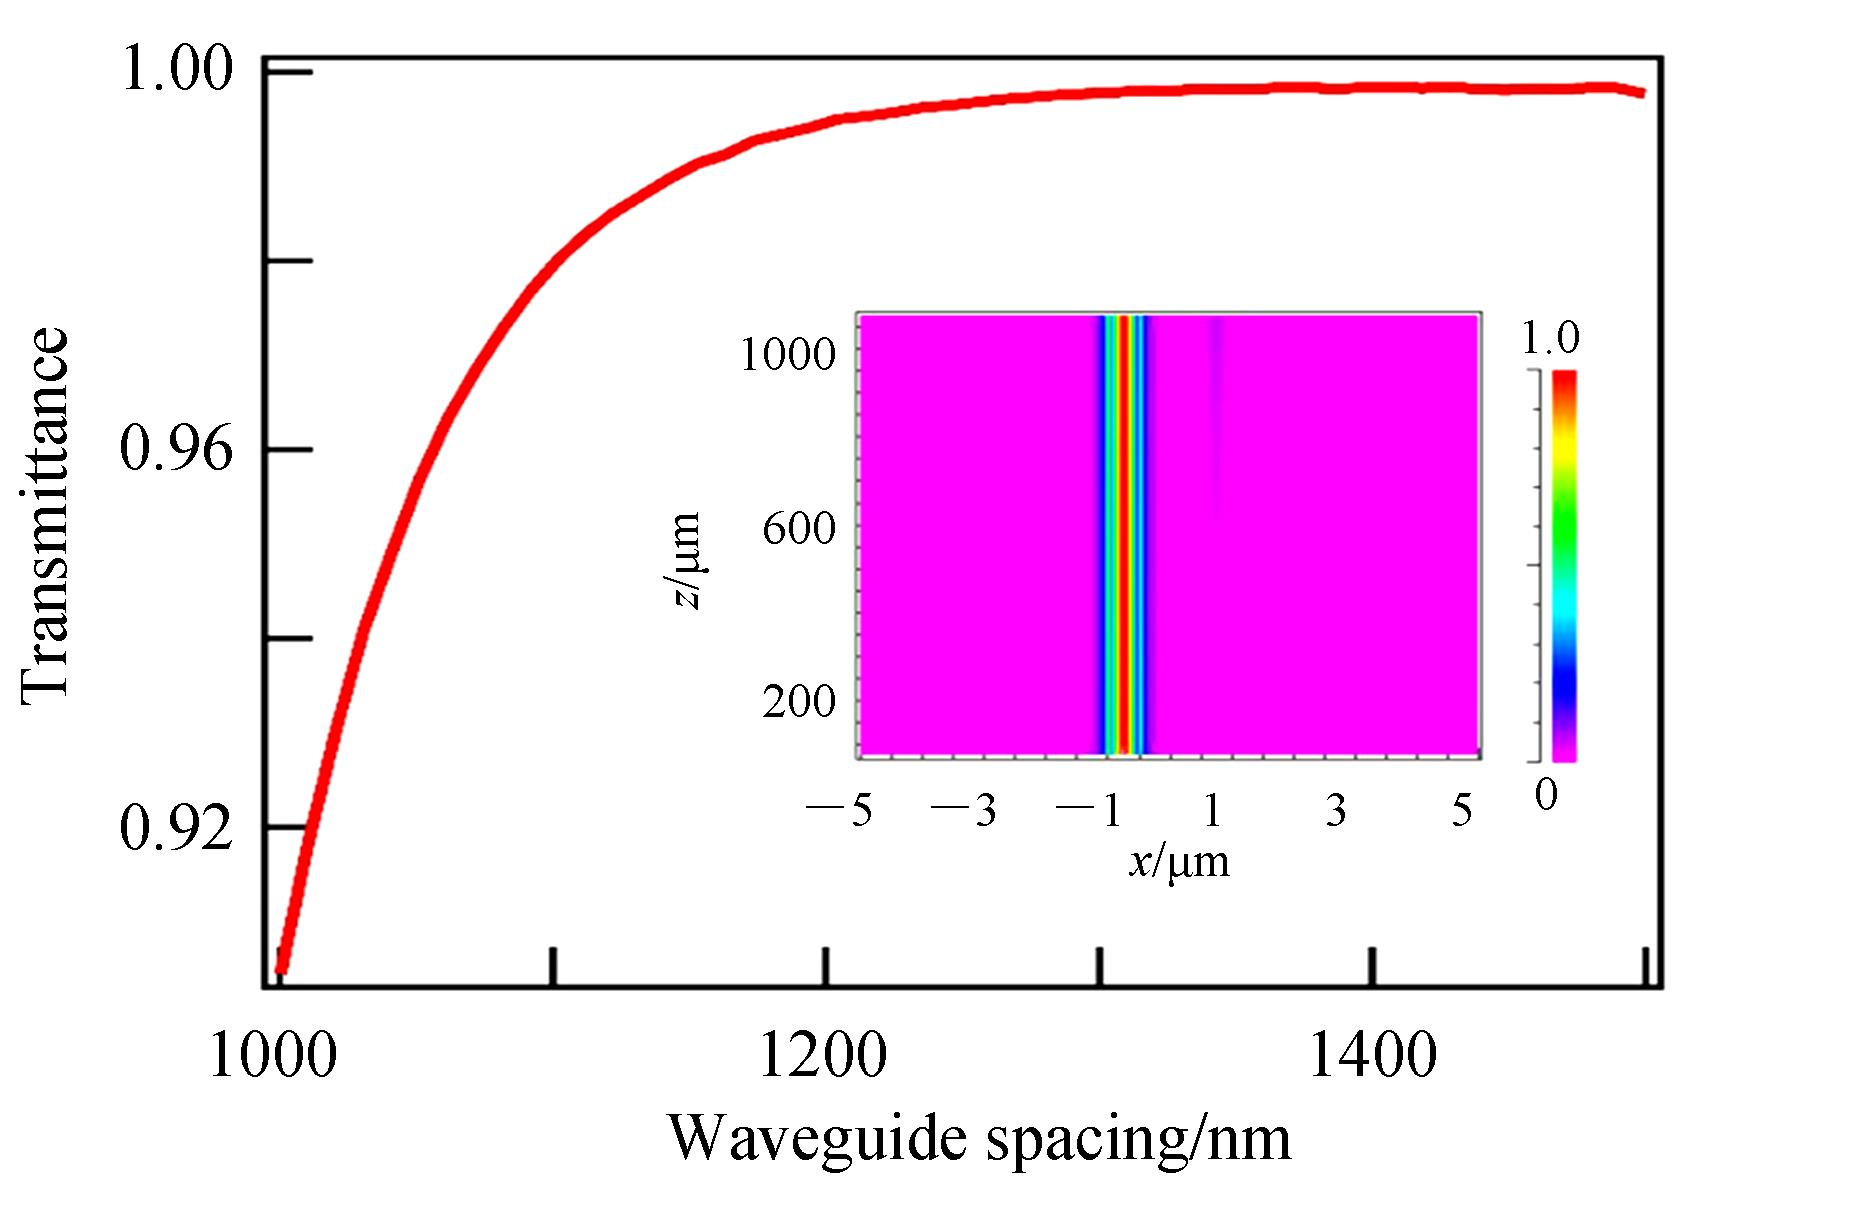 The relationship between array waveguide coupling crosstalk and waveguide length